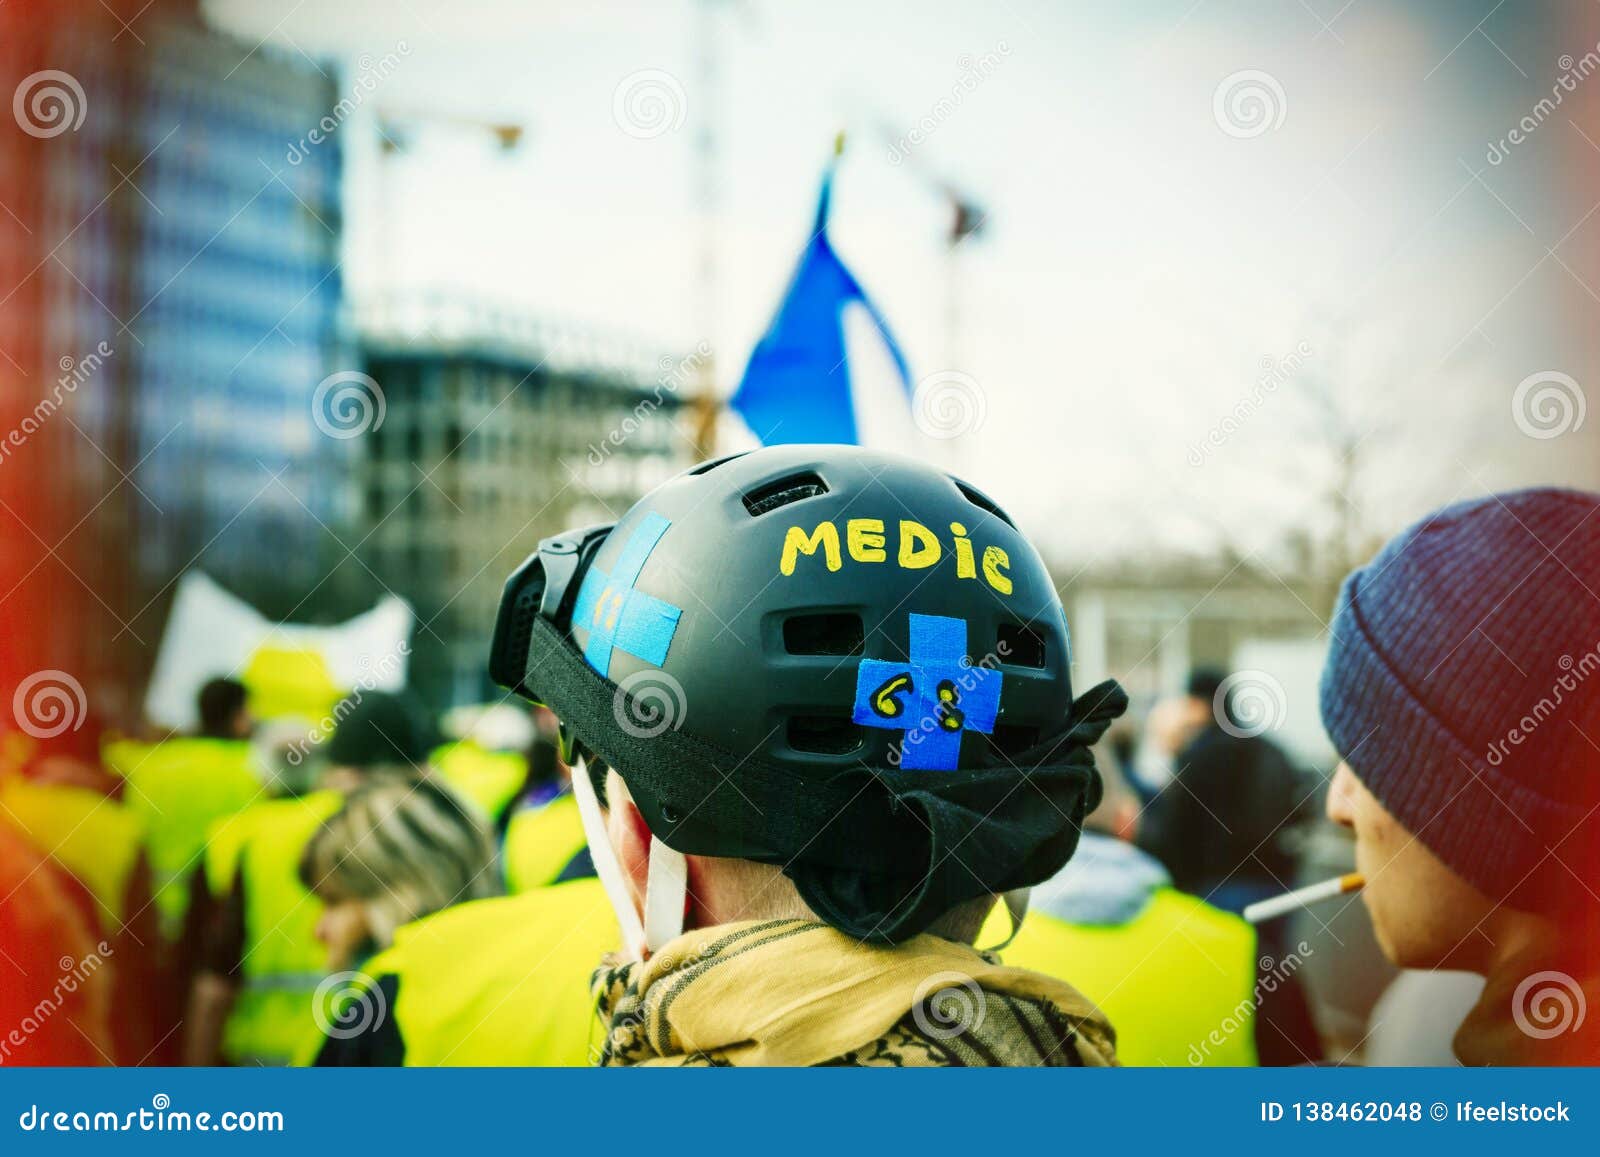 Man with Medic Helmet Walking Near Gilets Jaunes Editorial Stock Photo - of helmet, protest: 138462048